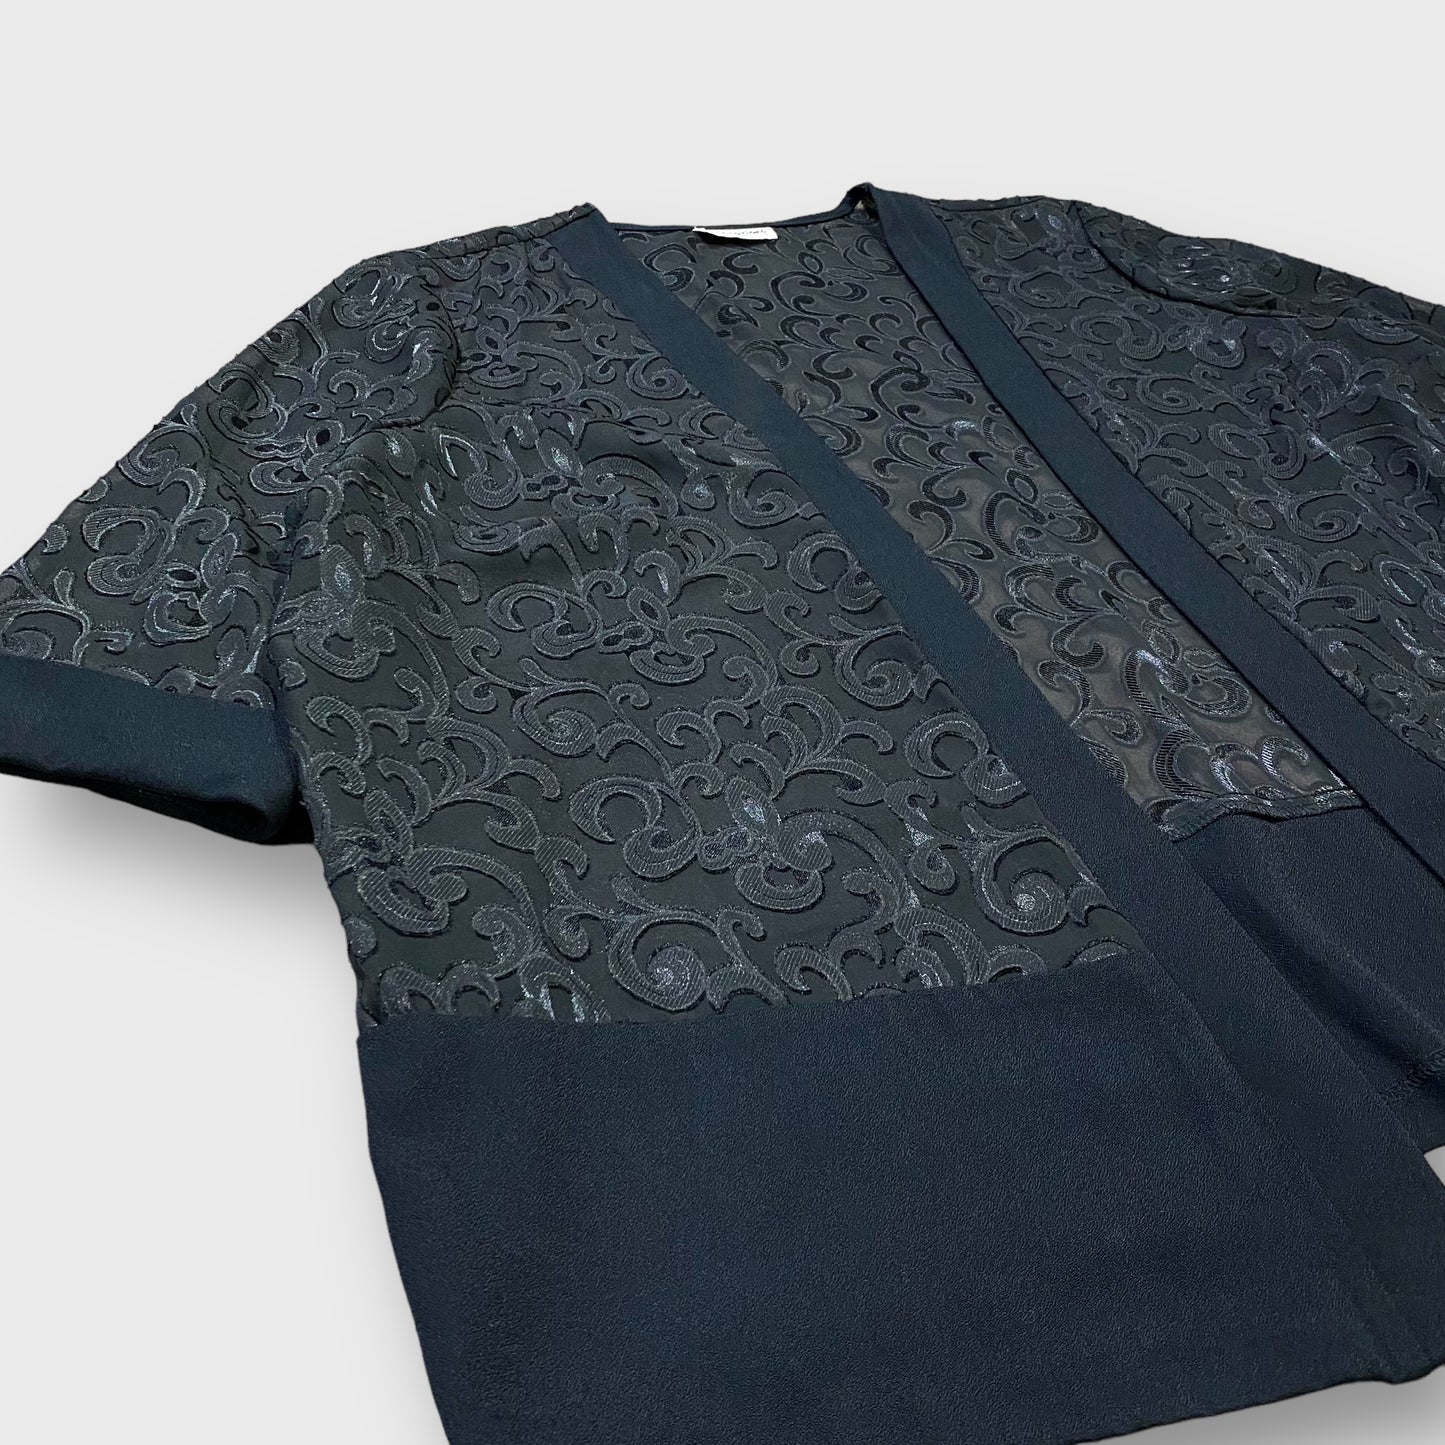 Botanical pattern velour sheer gown